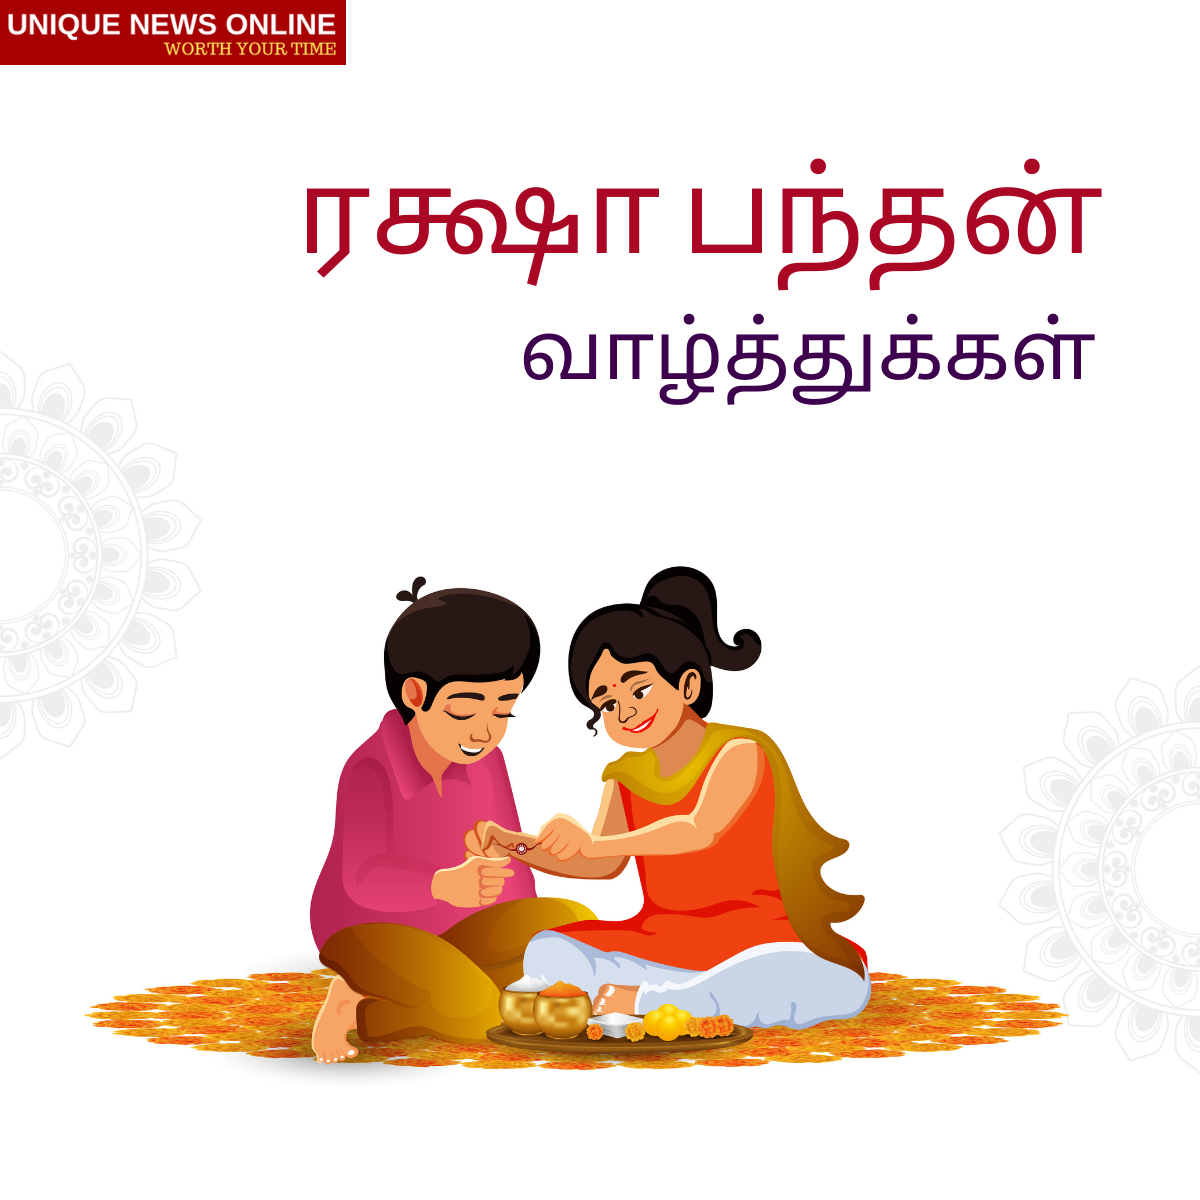 Happy Rakhi 2022: Raksha Bandhan Tamil and Malayalam Quotes، Images، Posters، Wishes، Greetings، and Messages لتحية أختك / أخيك